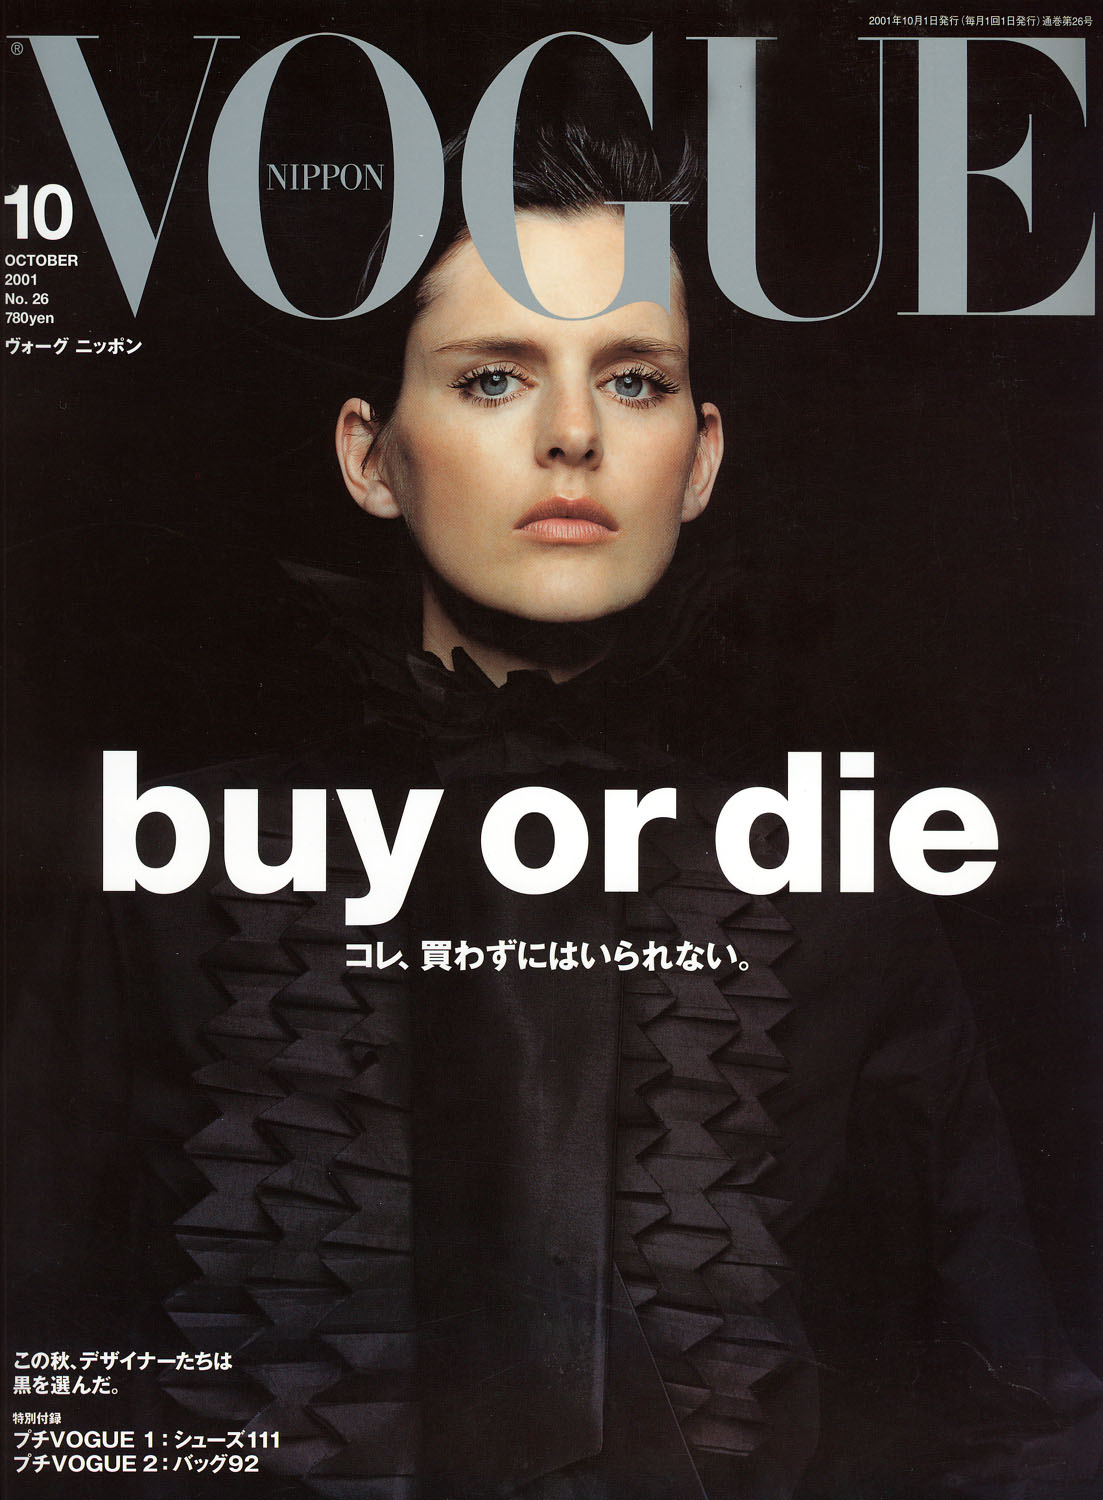 Stella Tennant 'buy or die'-Vogue Nippon (October 2001)ph. Nathaniel Goldberg.jpg